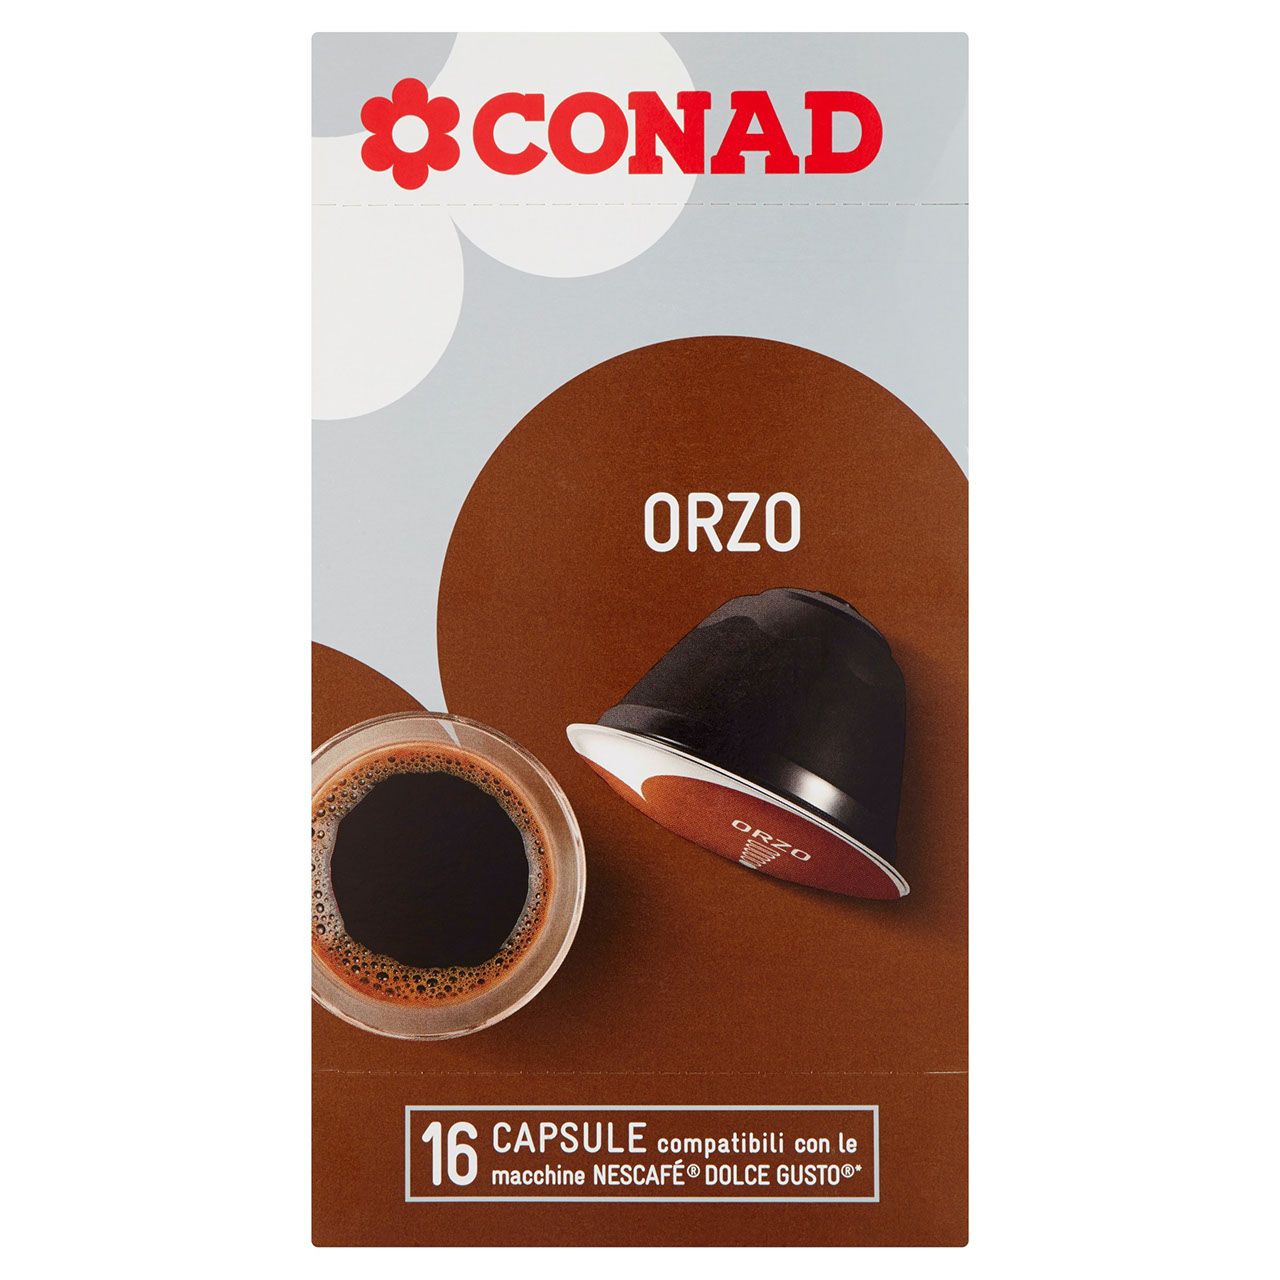 Orzo 16 capsule Conad in vendita  online